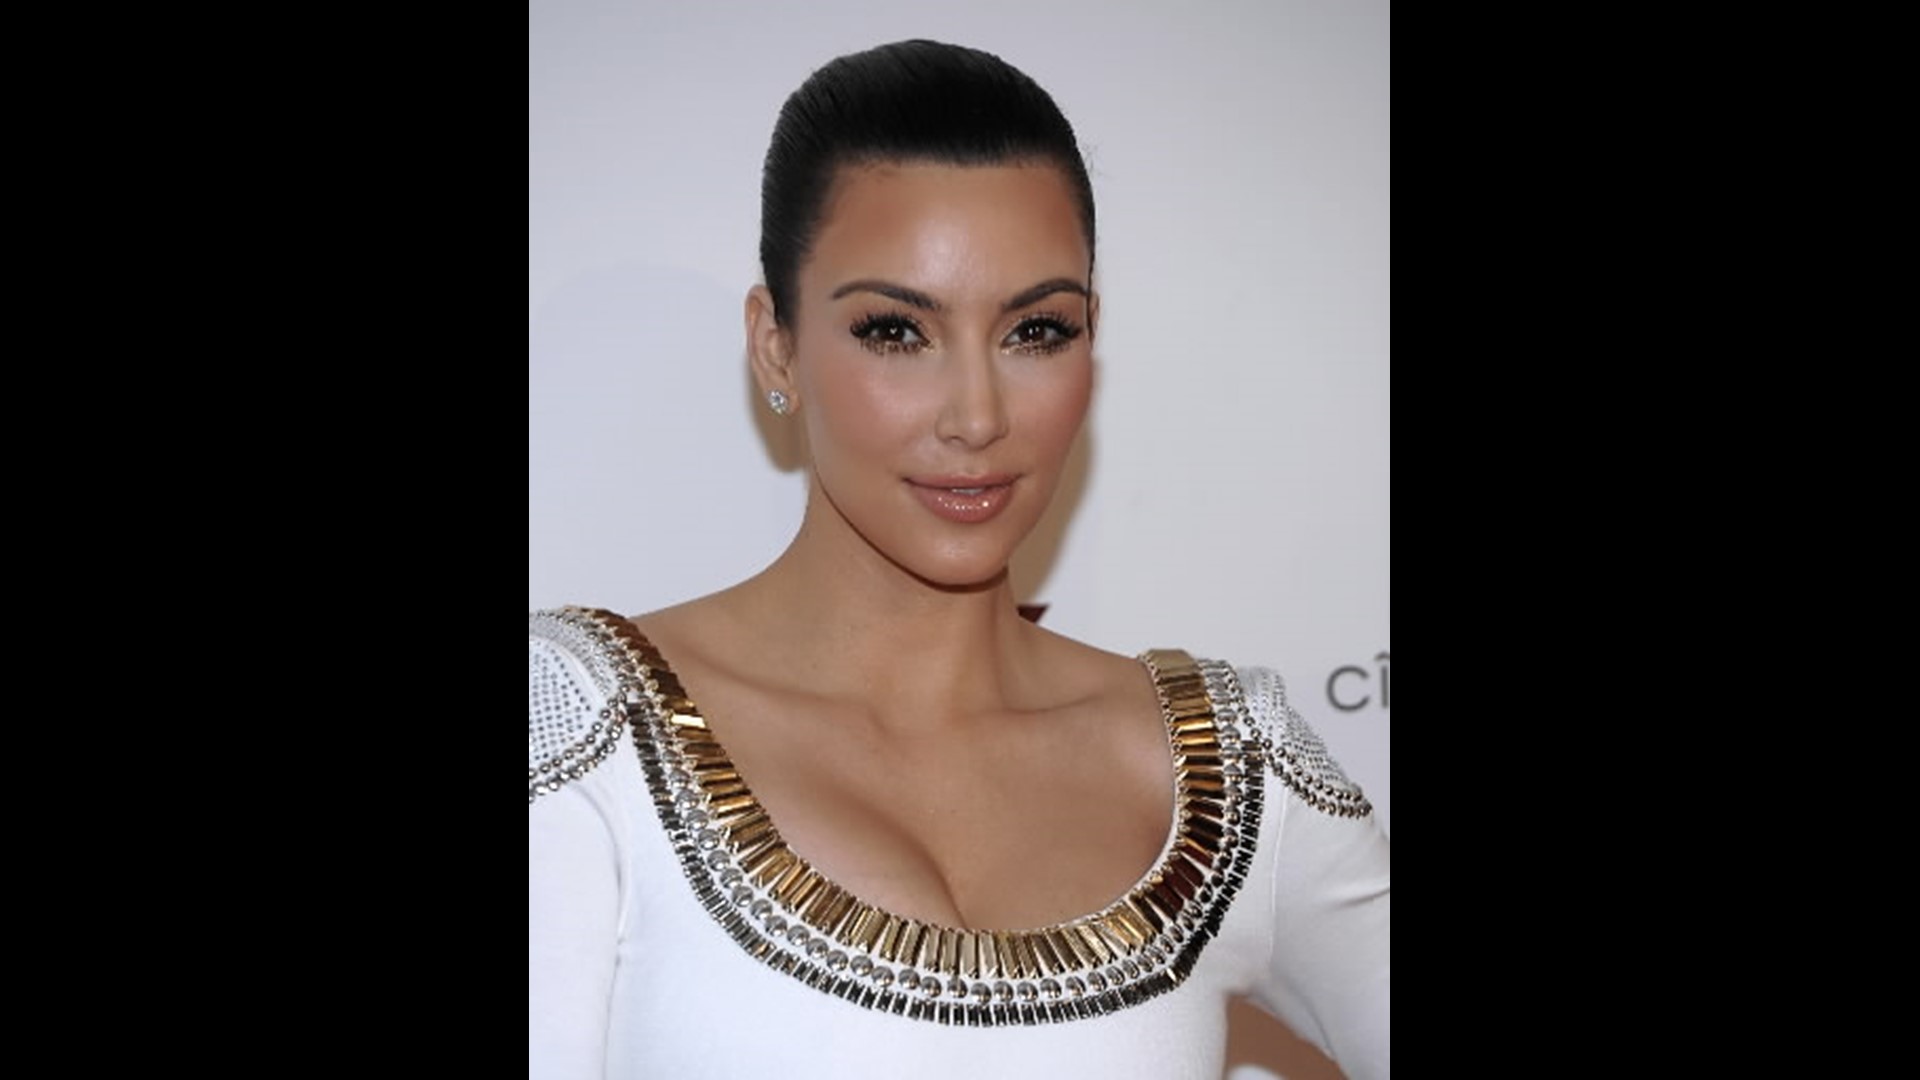 Kim Kardashian To File For Divorce After 2 Months